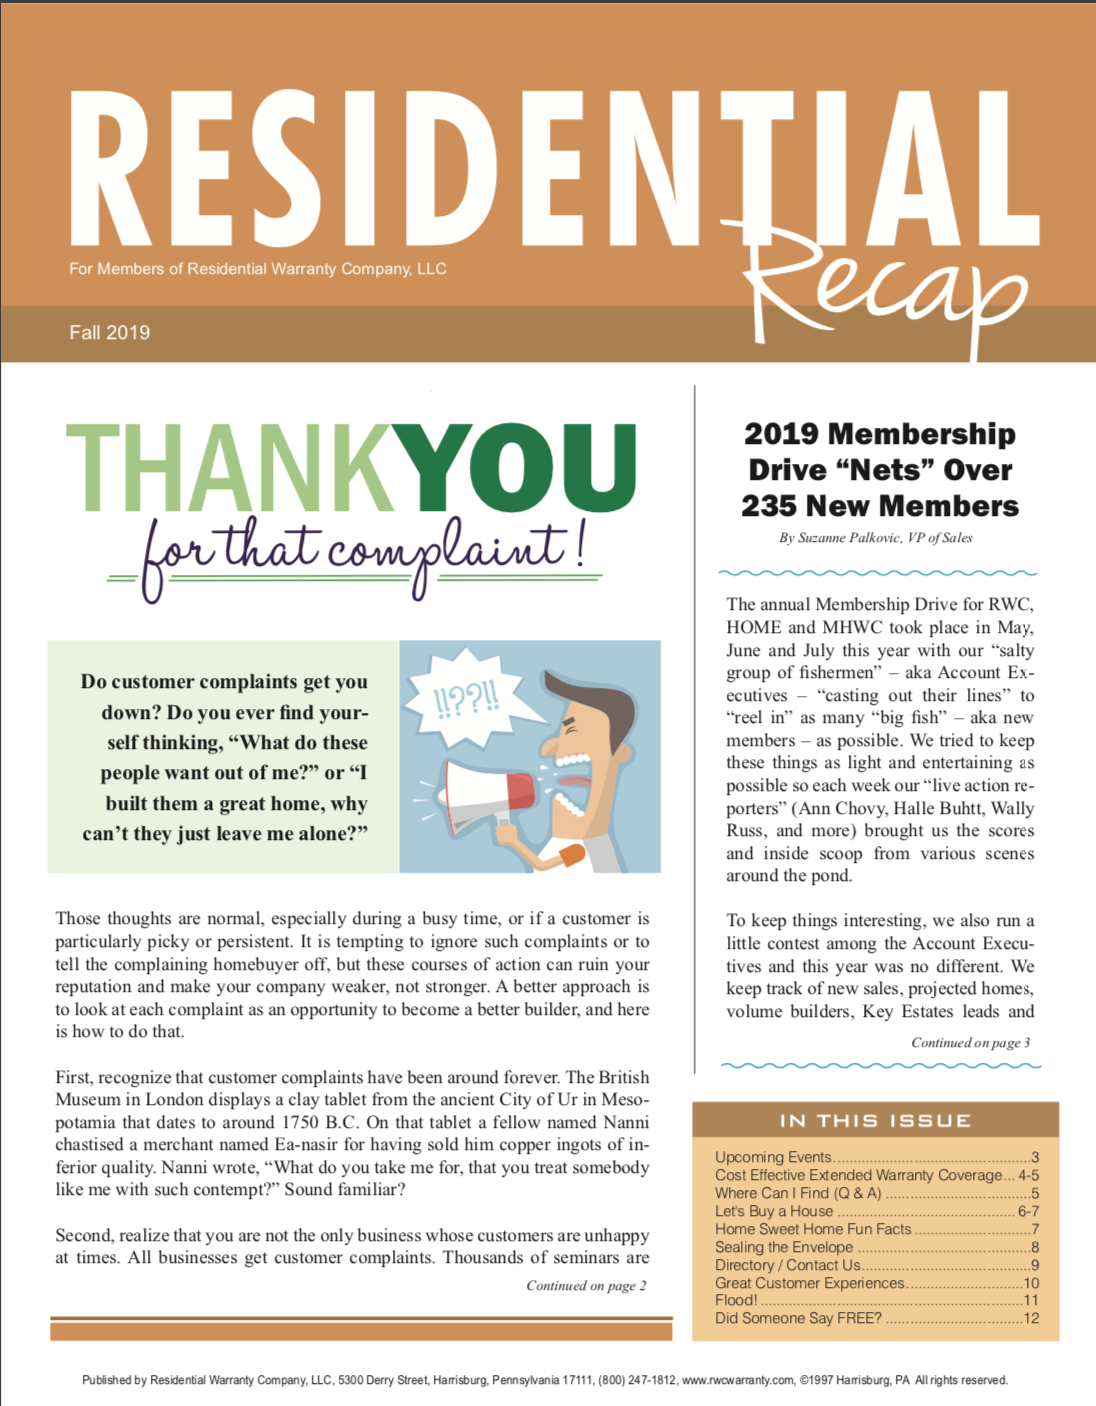 Fall 2019 Residential Recap